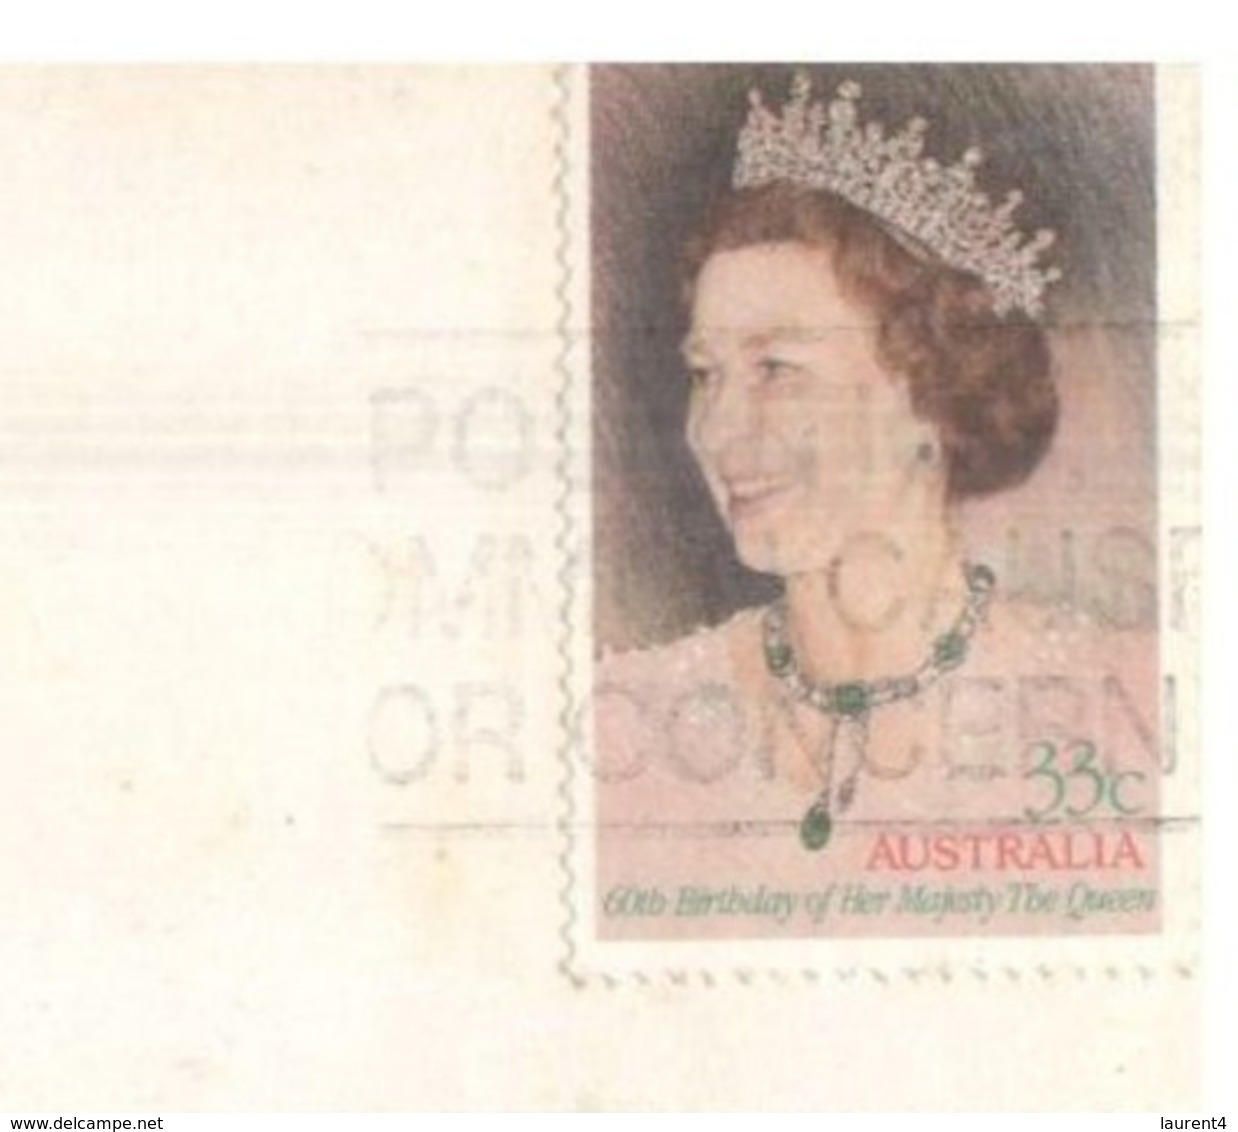 (F 1) Australia - NT - Jim Jim Fall (with Stamp) - Unclassified